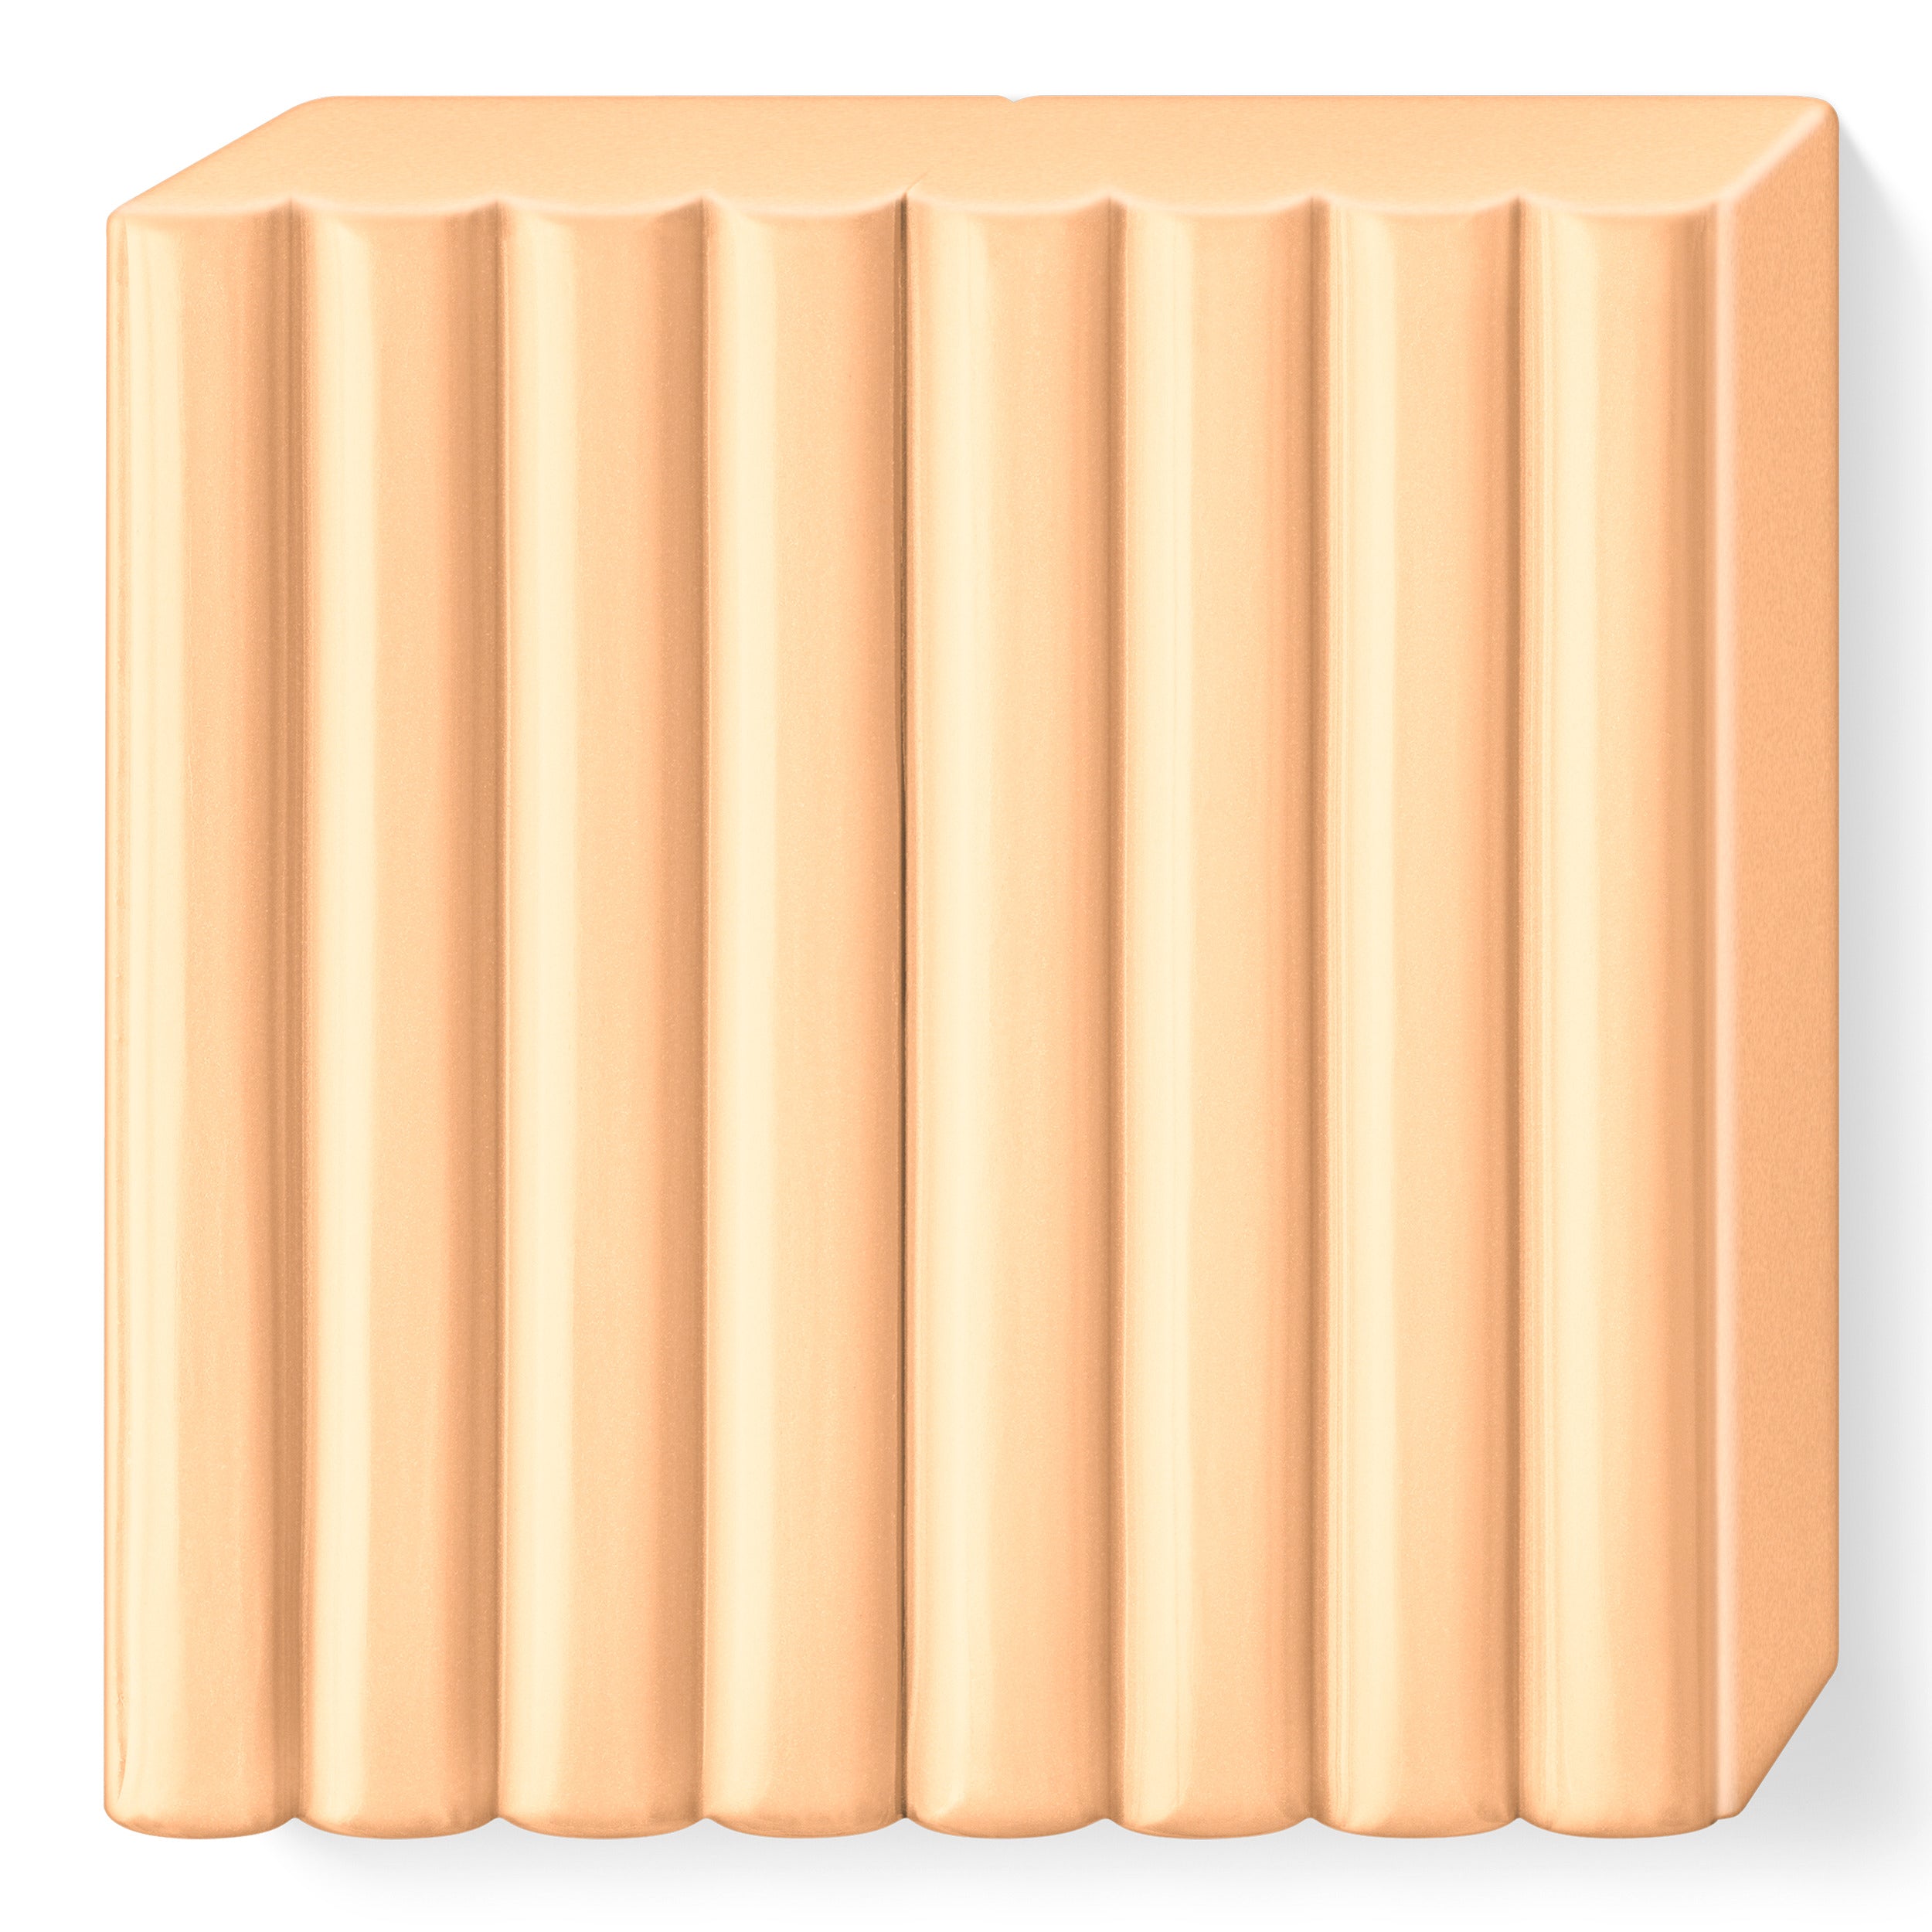 Fimo Effect Polymer Clay Standard Block 57g (2oz) - Pastel Peach